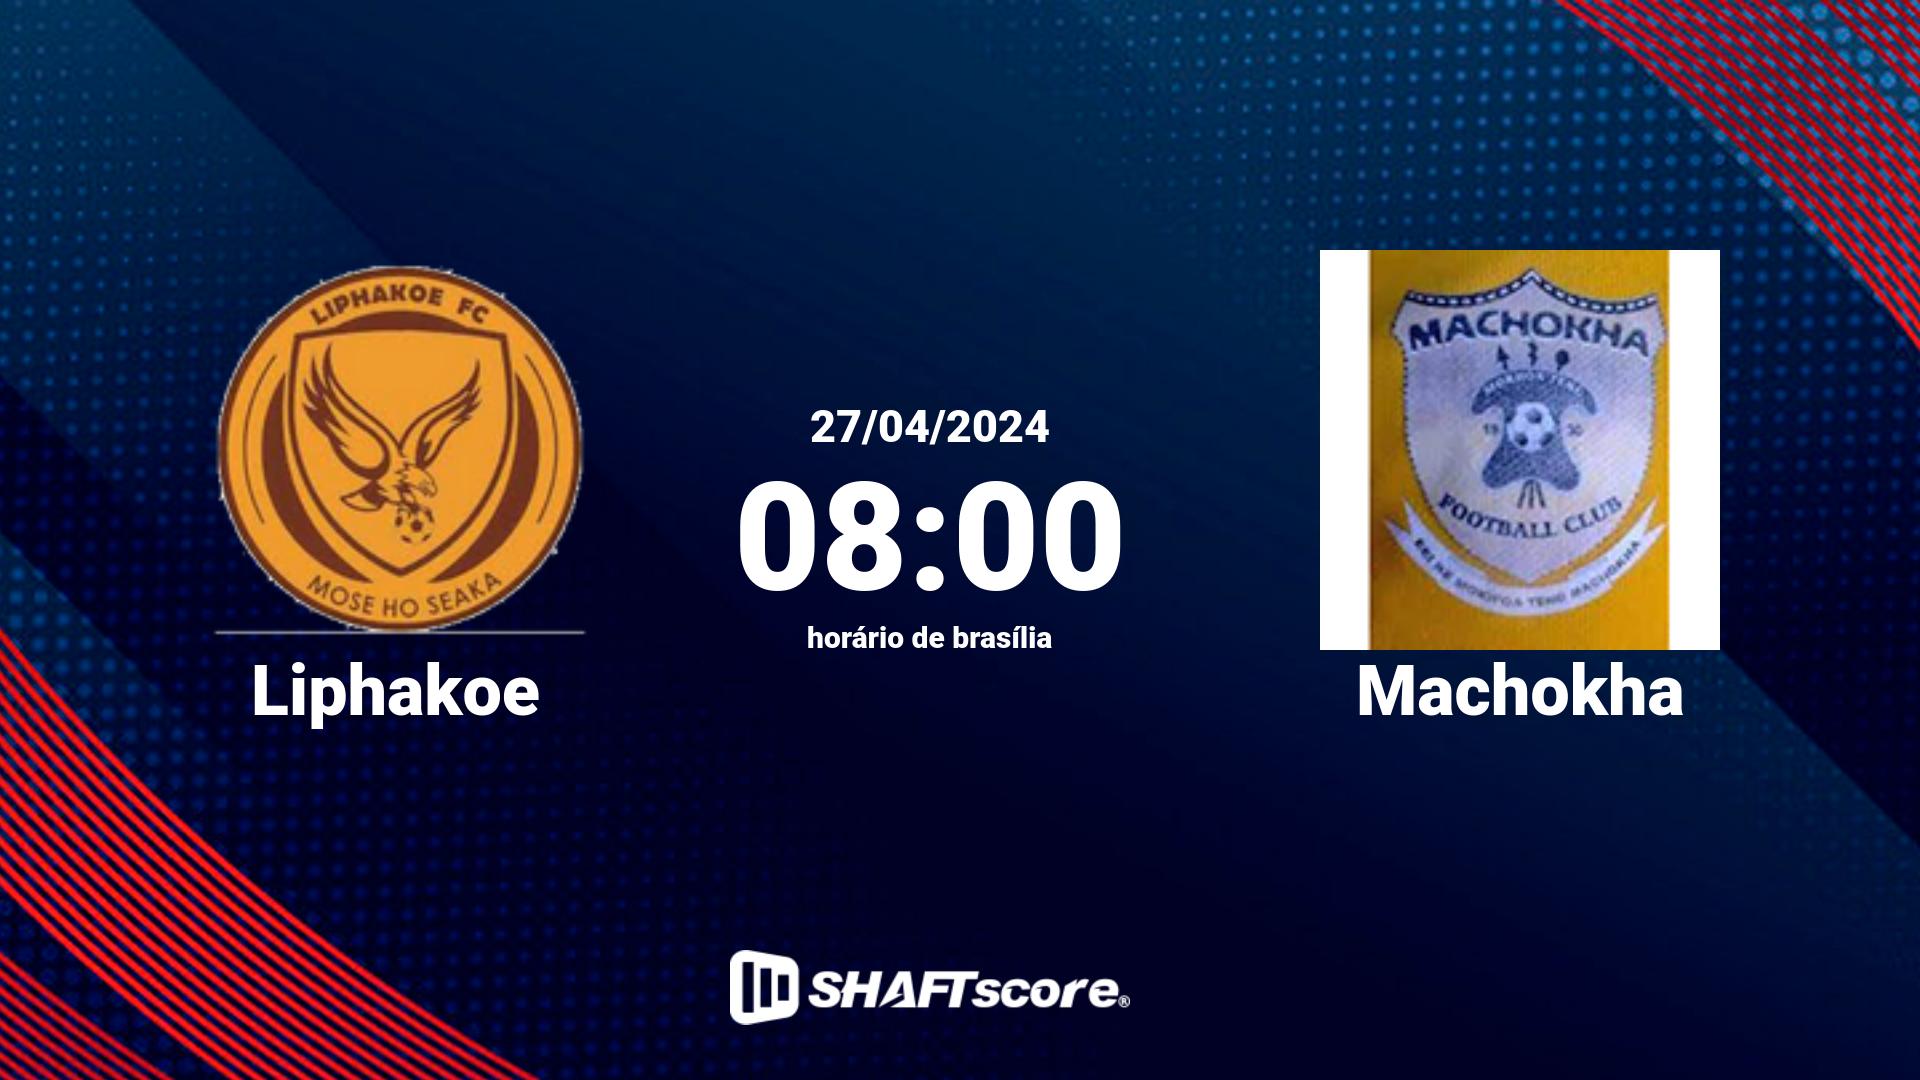 Estatísticas do jogo Liphakoe vs Machokha 27.04 08:00